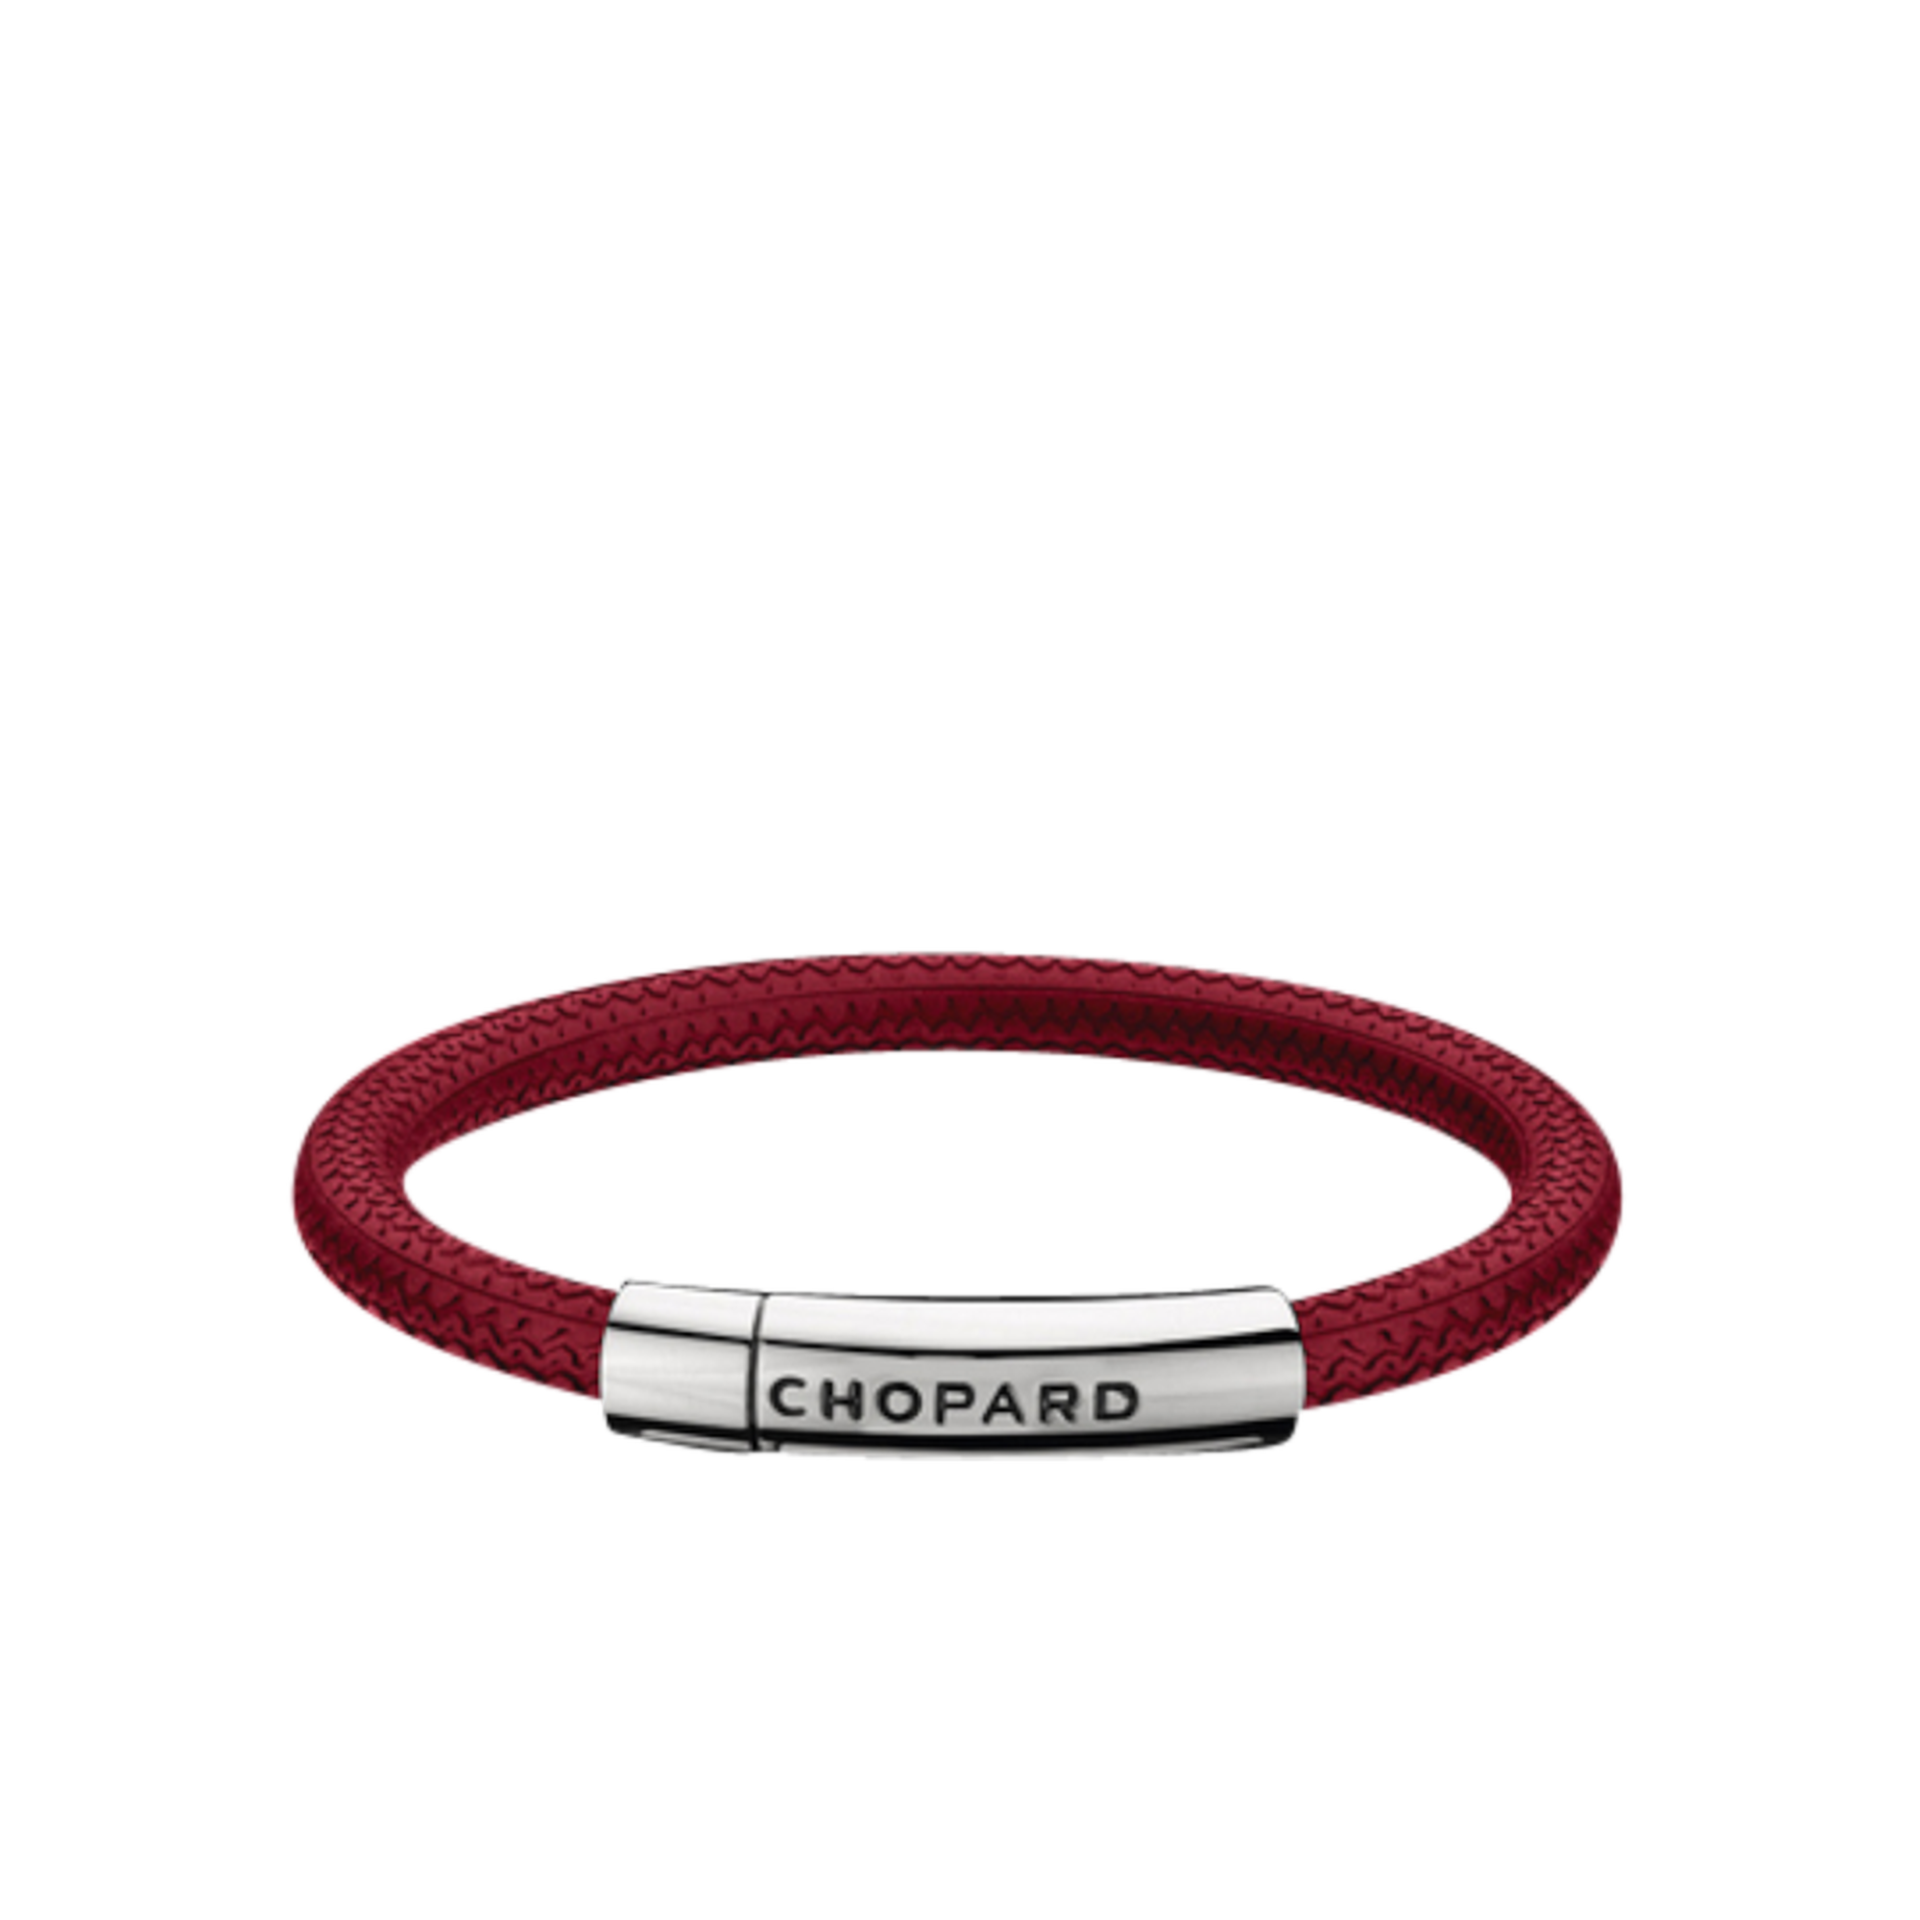 Chopard Mille Miglia bracelet